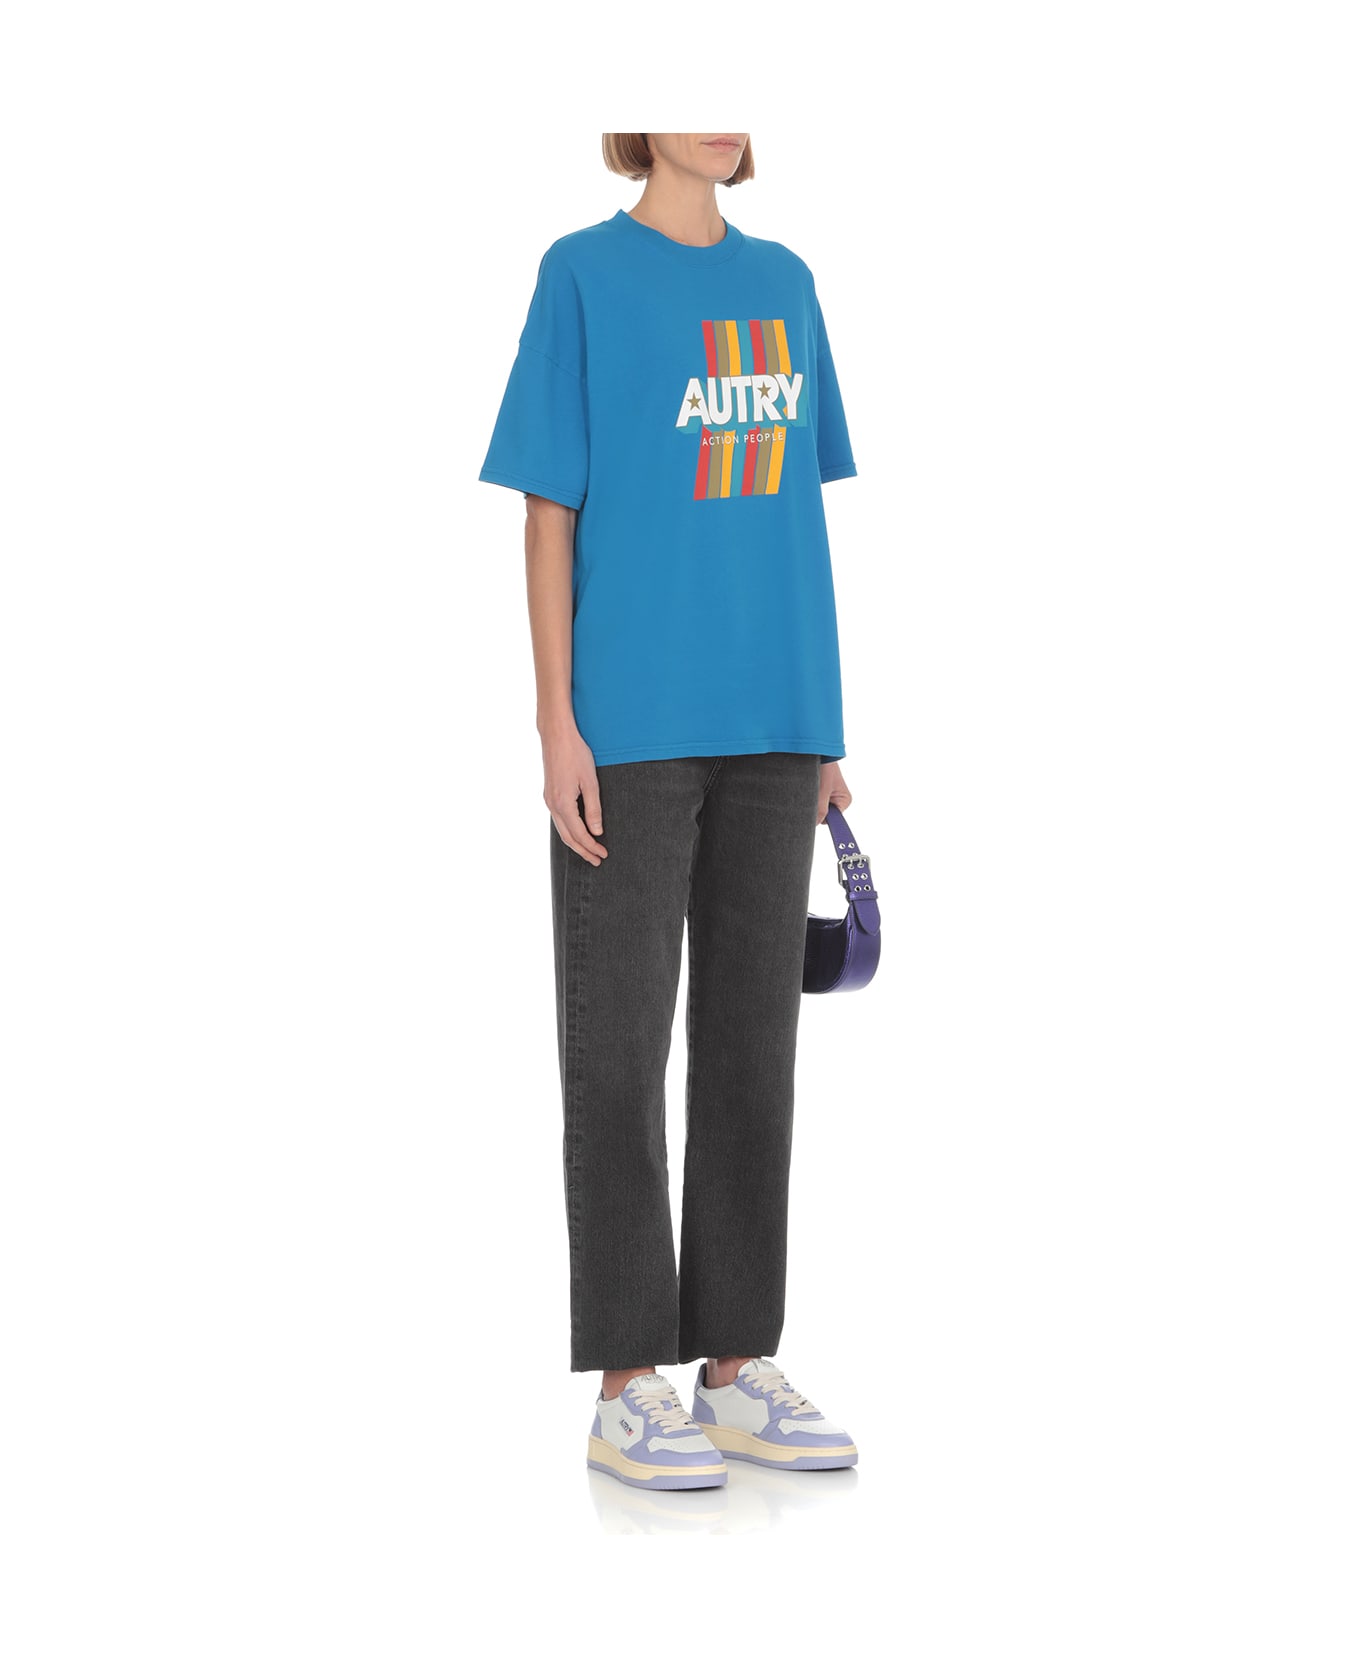 Autry Aerobic Wom T-shirt - Blue Tシャツ